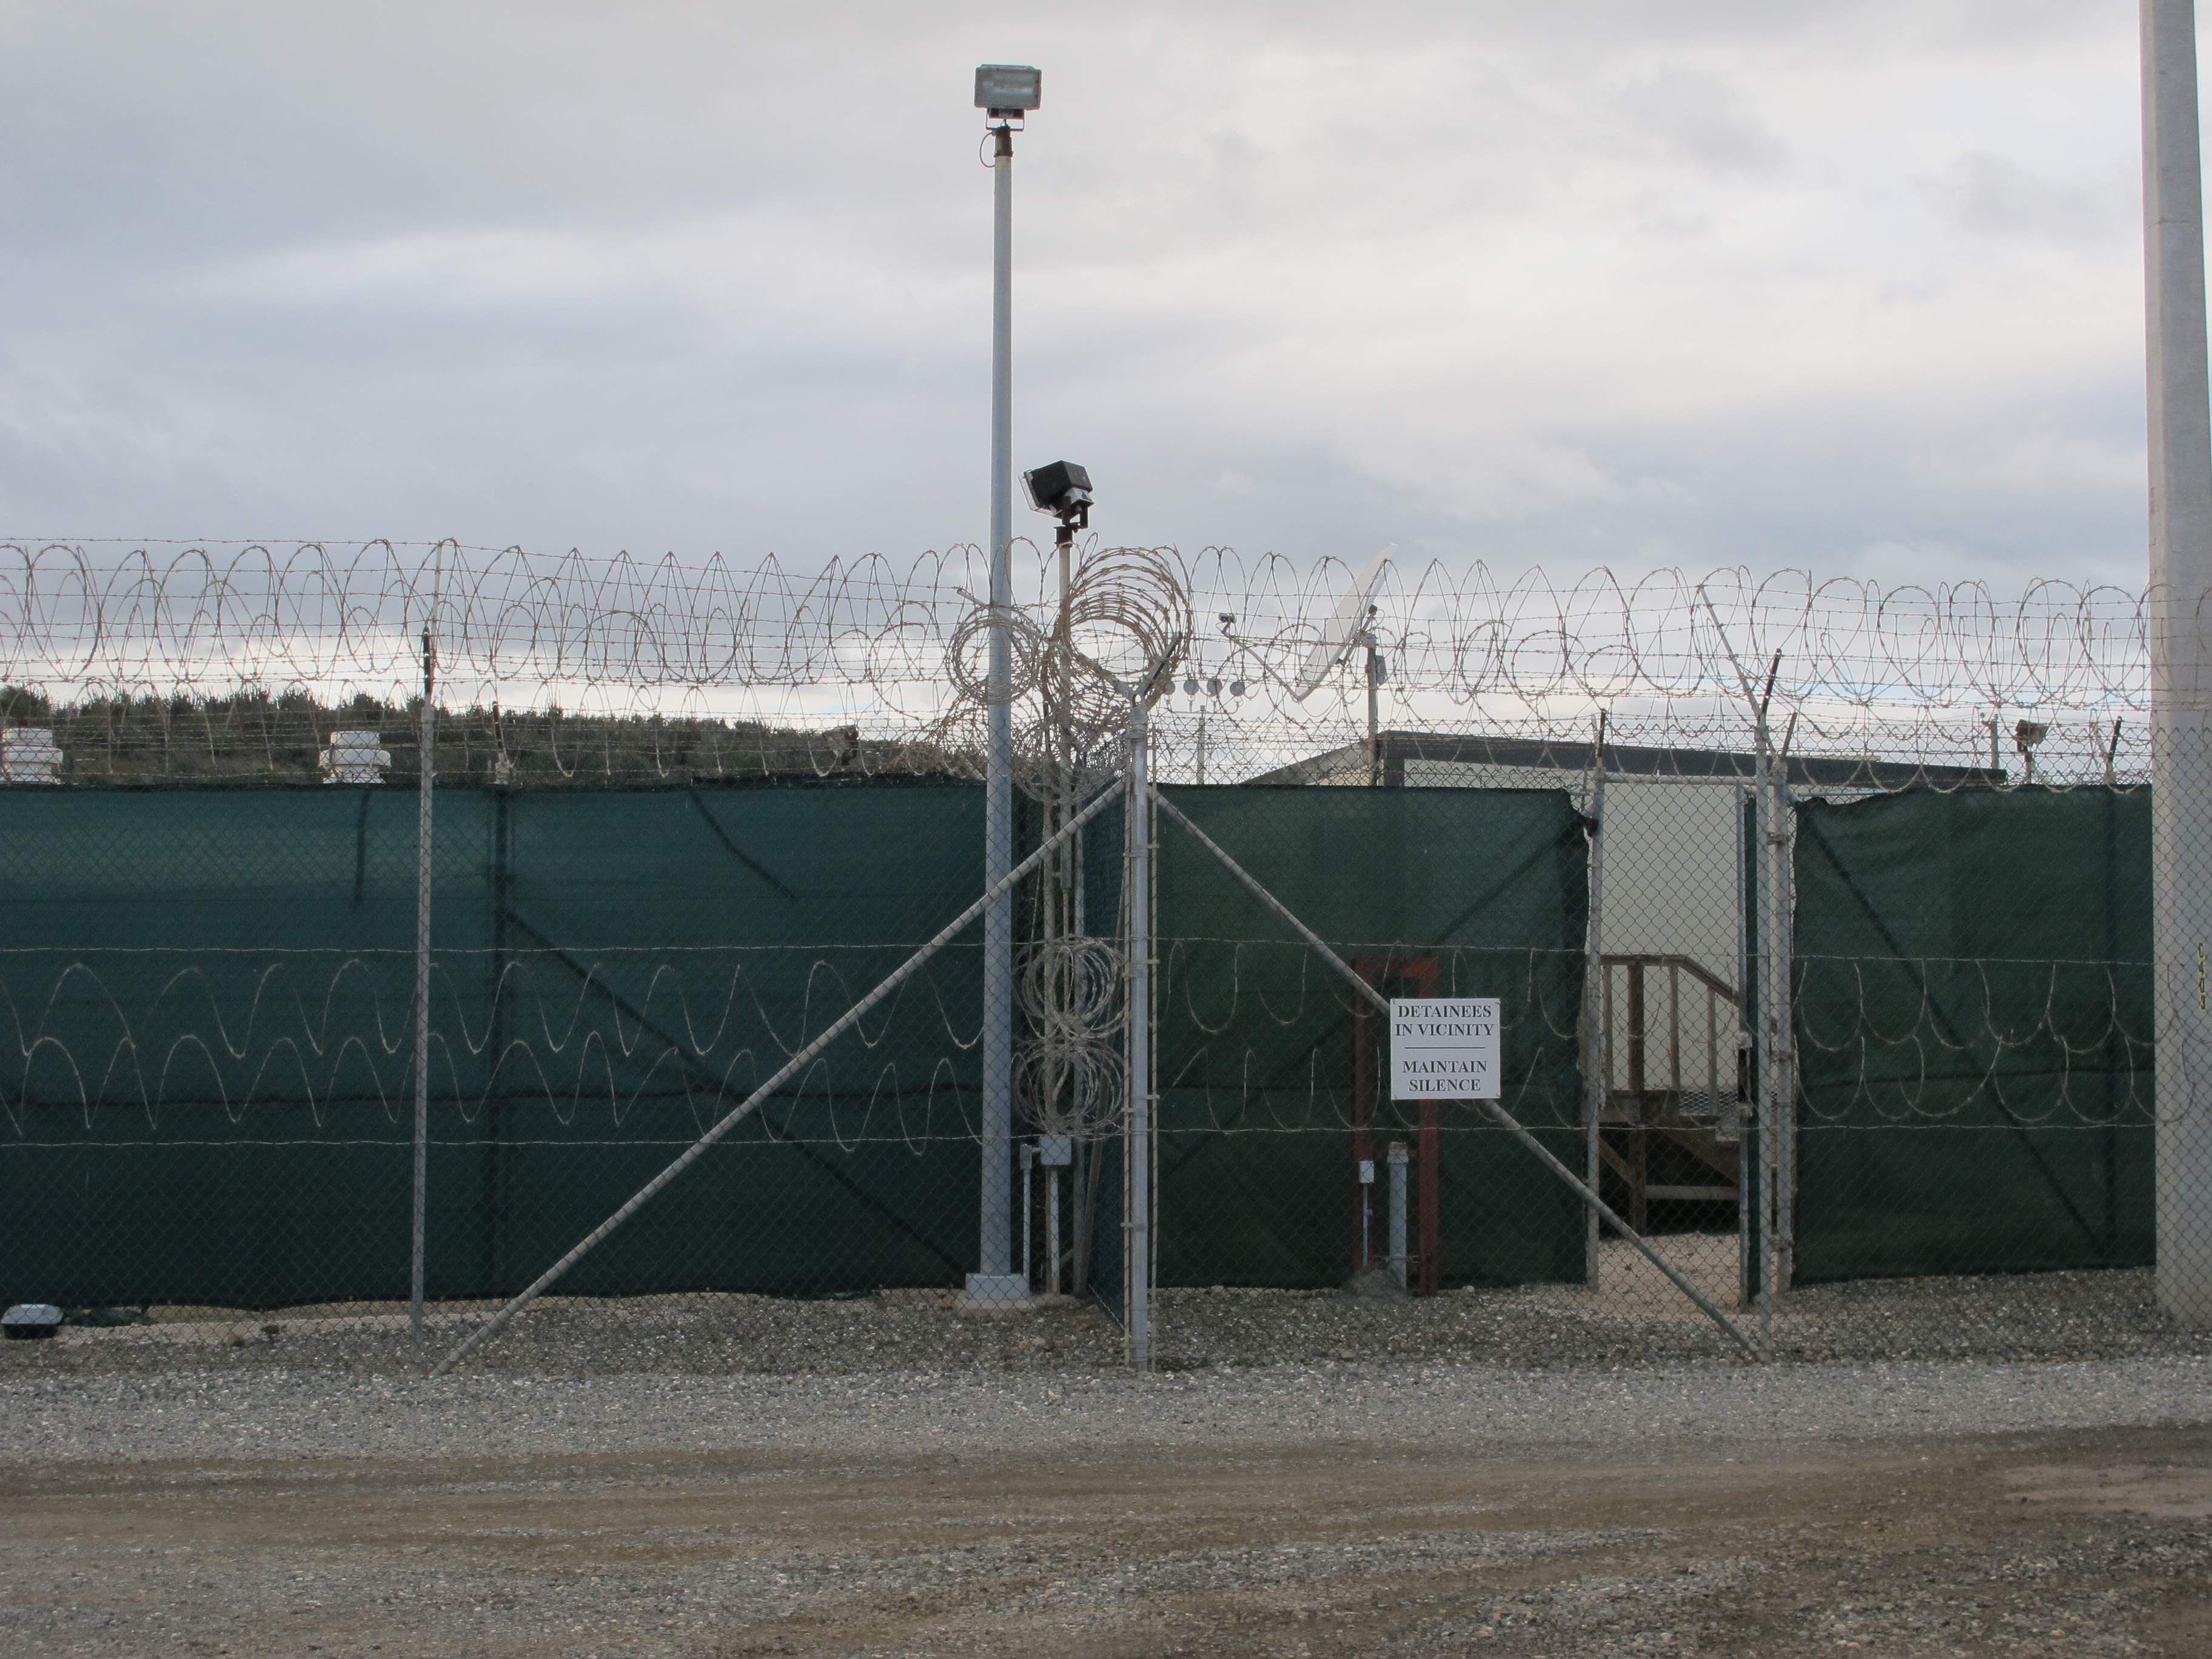 Guantanamo Bay. Image by Tyler Cabot, Cuba, 2011.